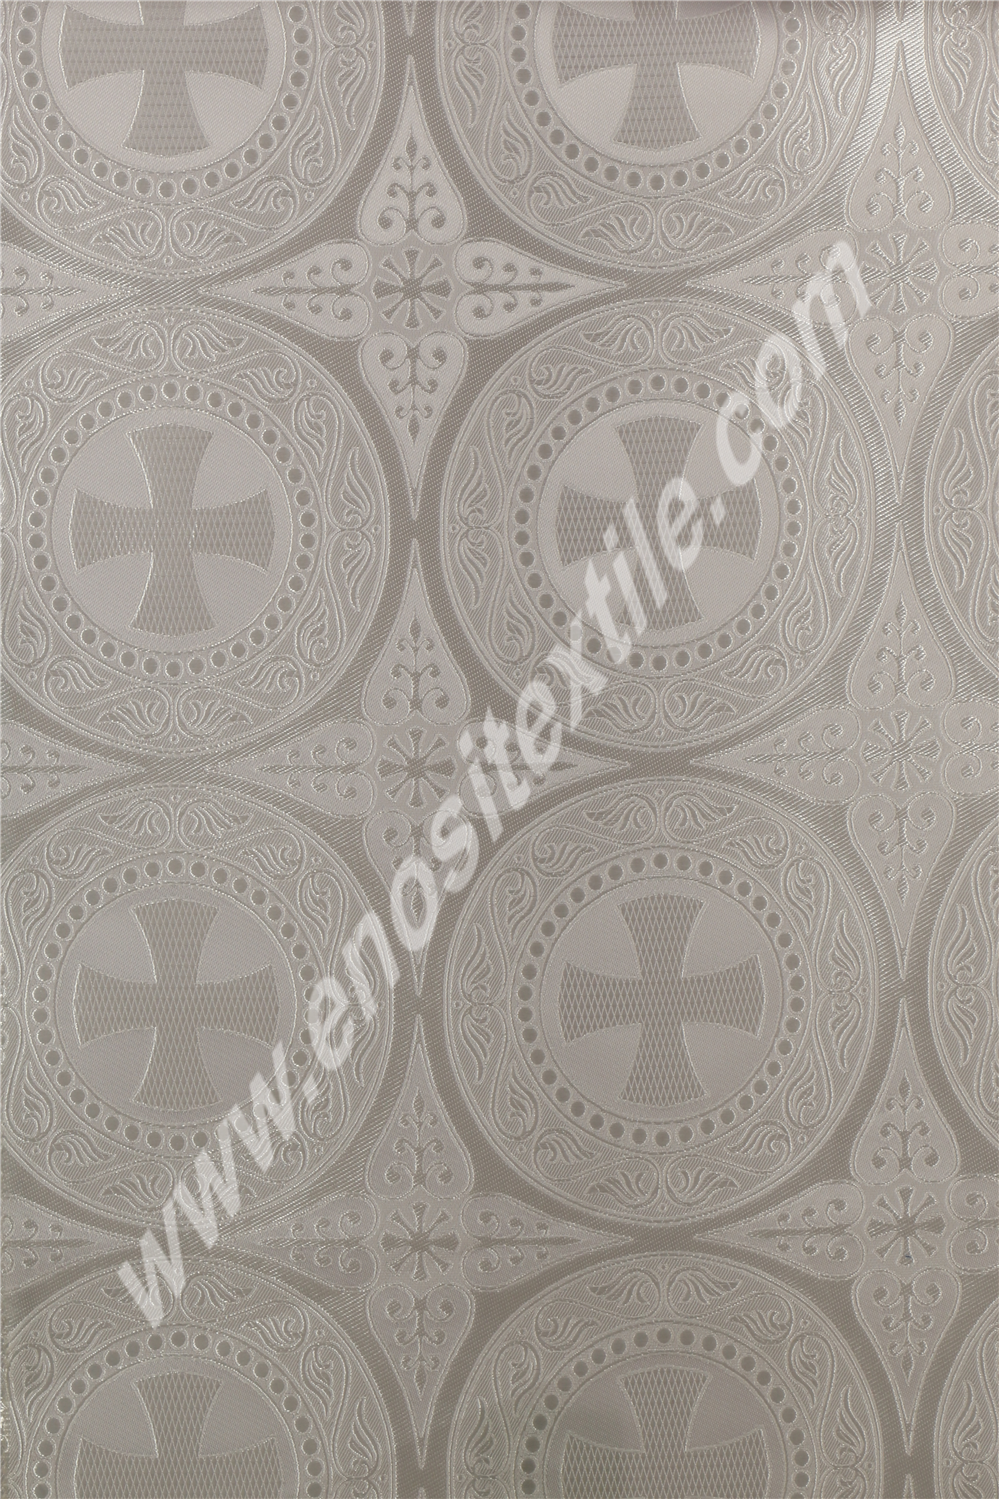 KL-022 White-Silver Brocade Fabrics